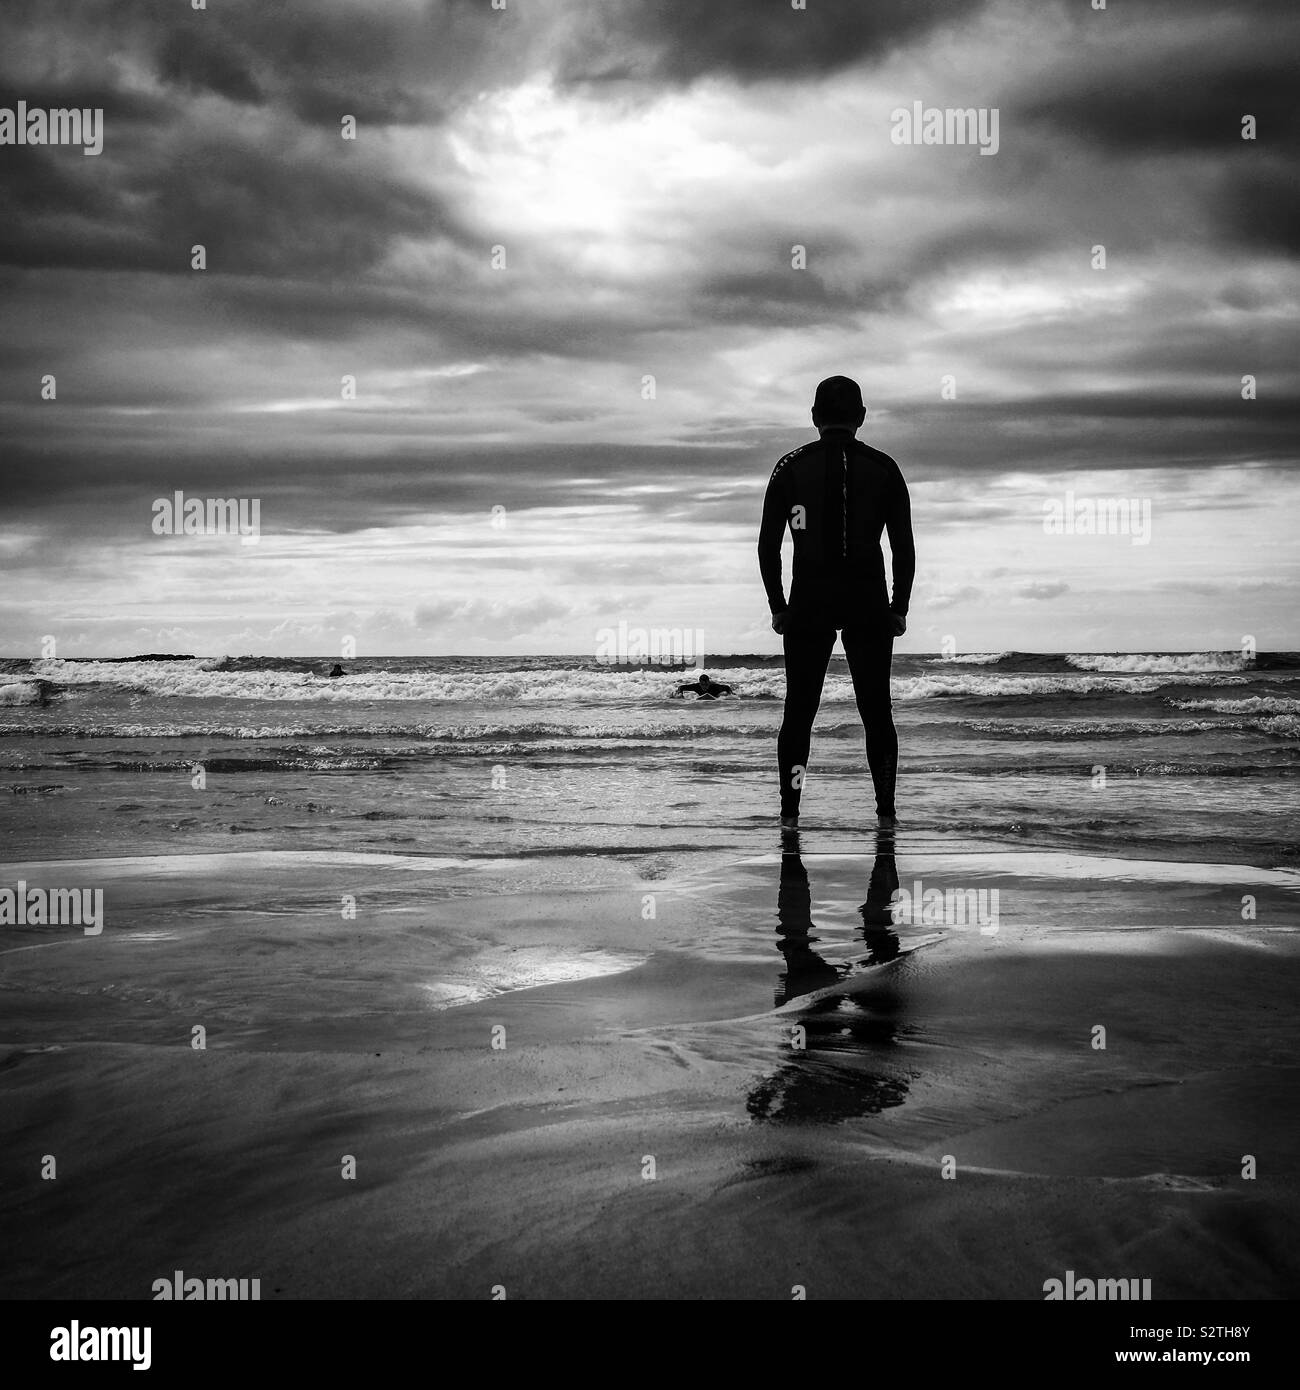 Man on the Beach, Silhouette. Stock Photo